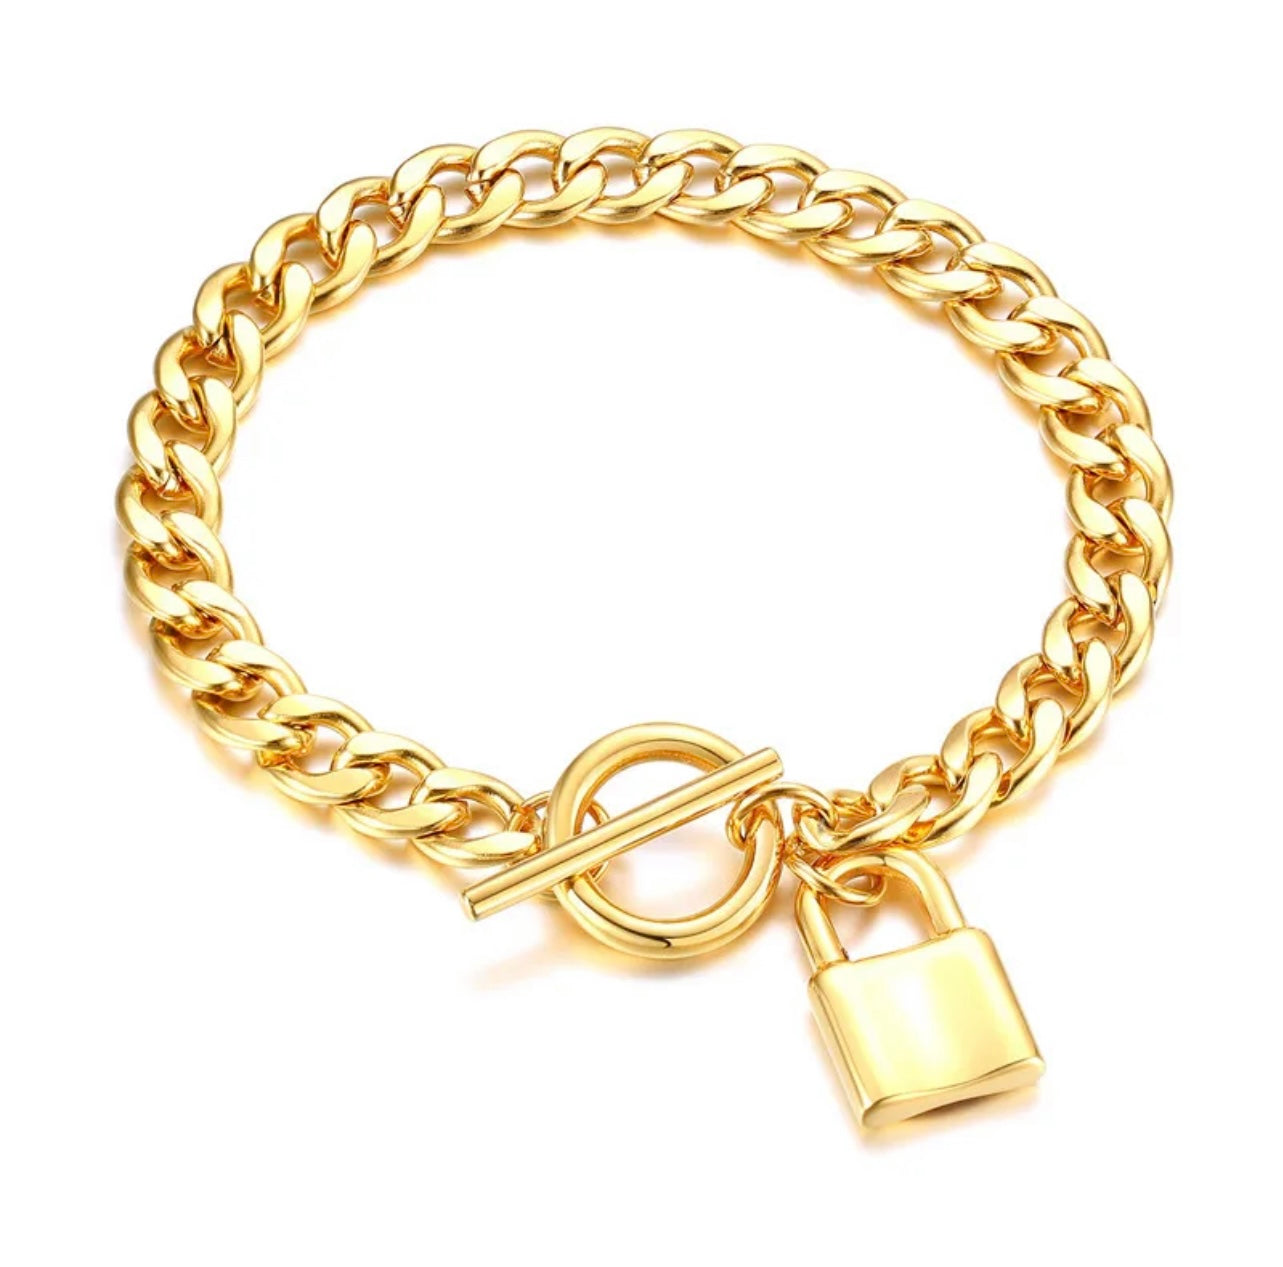 Chain Lock bracelet